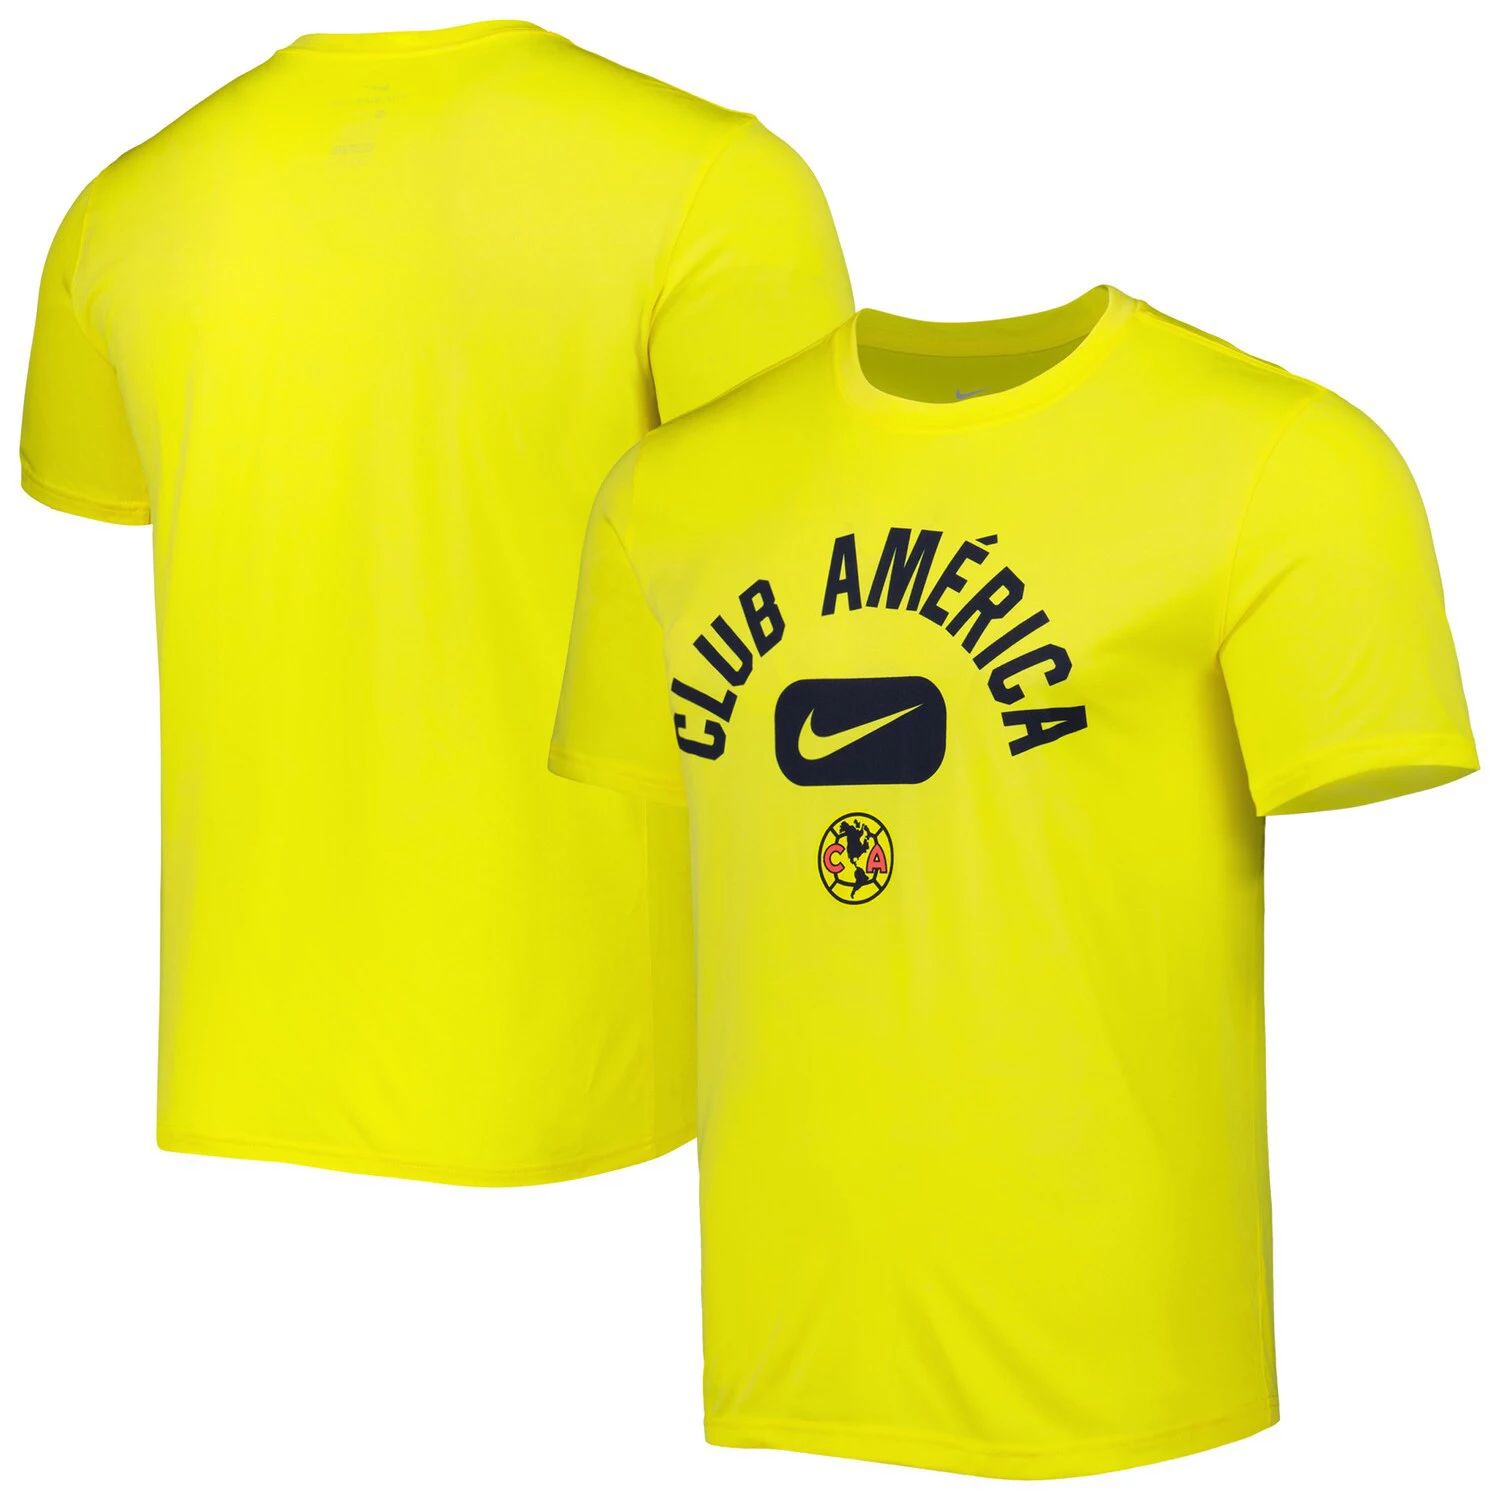 Мужская желтая футболка Club America Lockup Legend Performance Nike